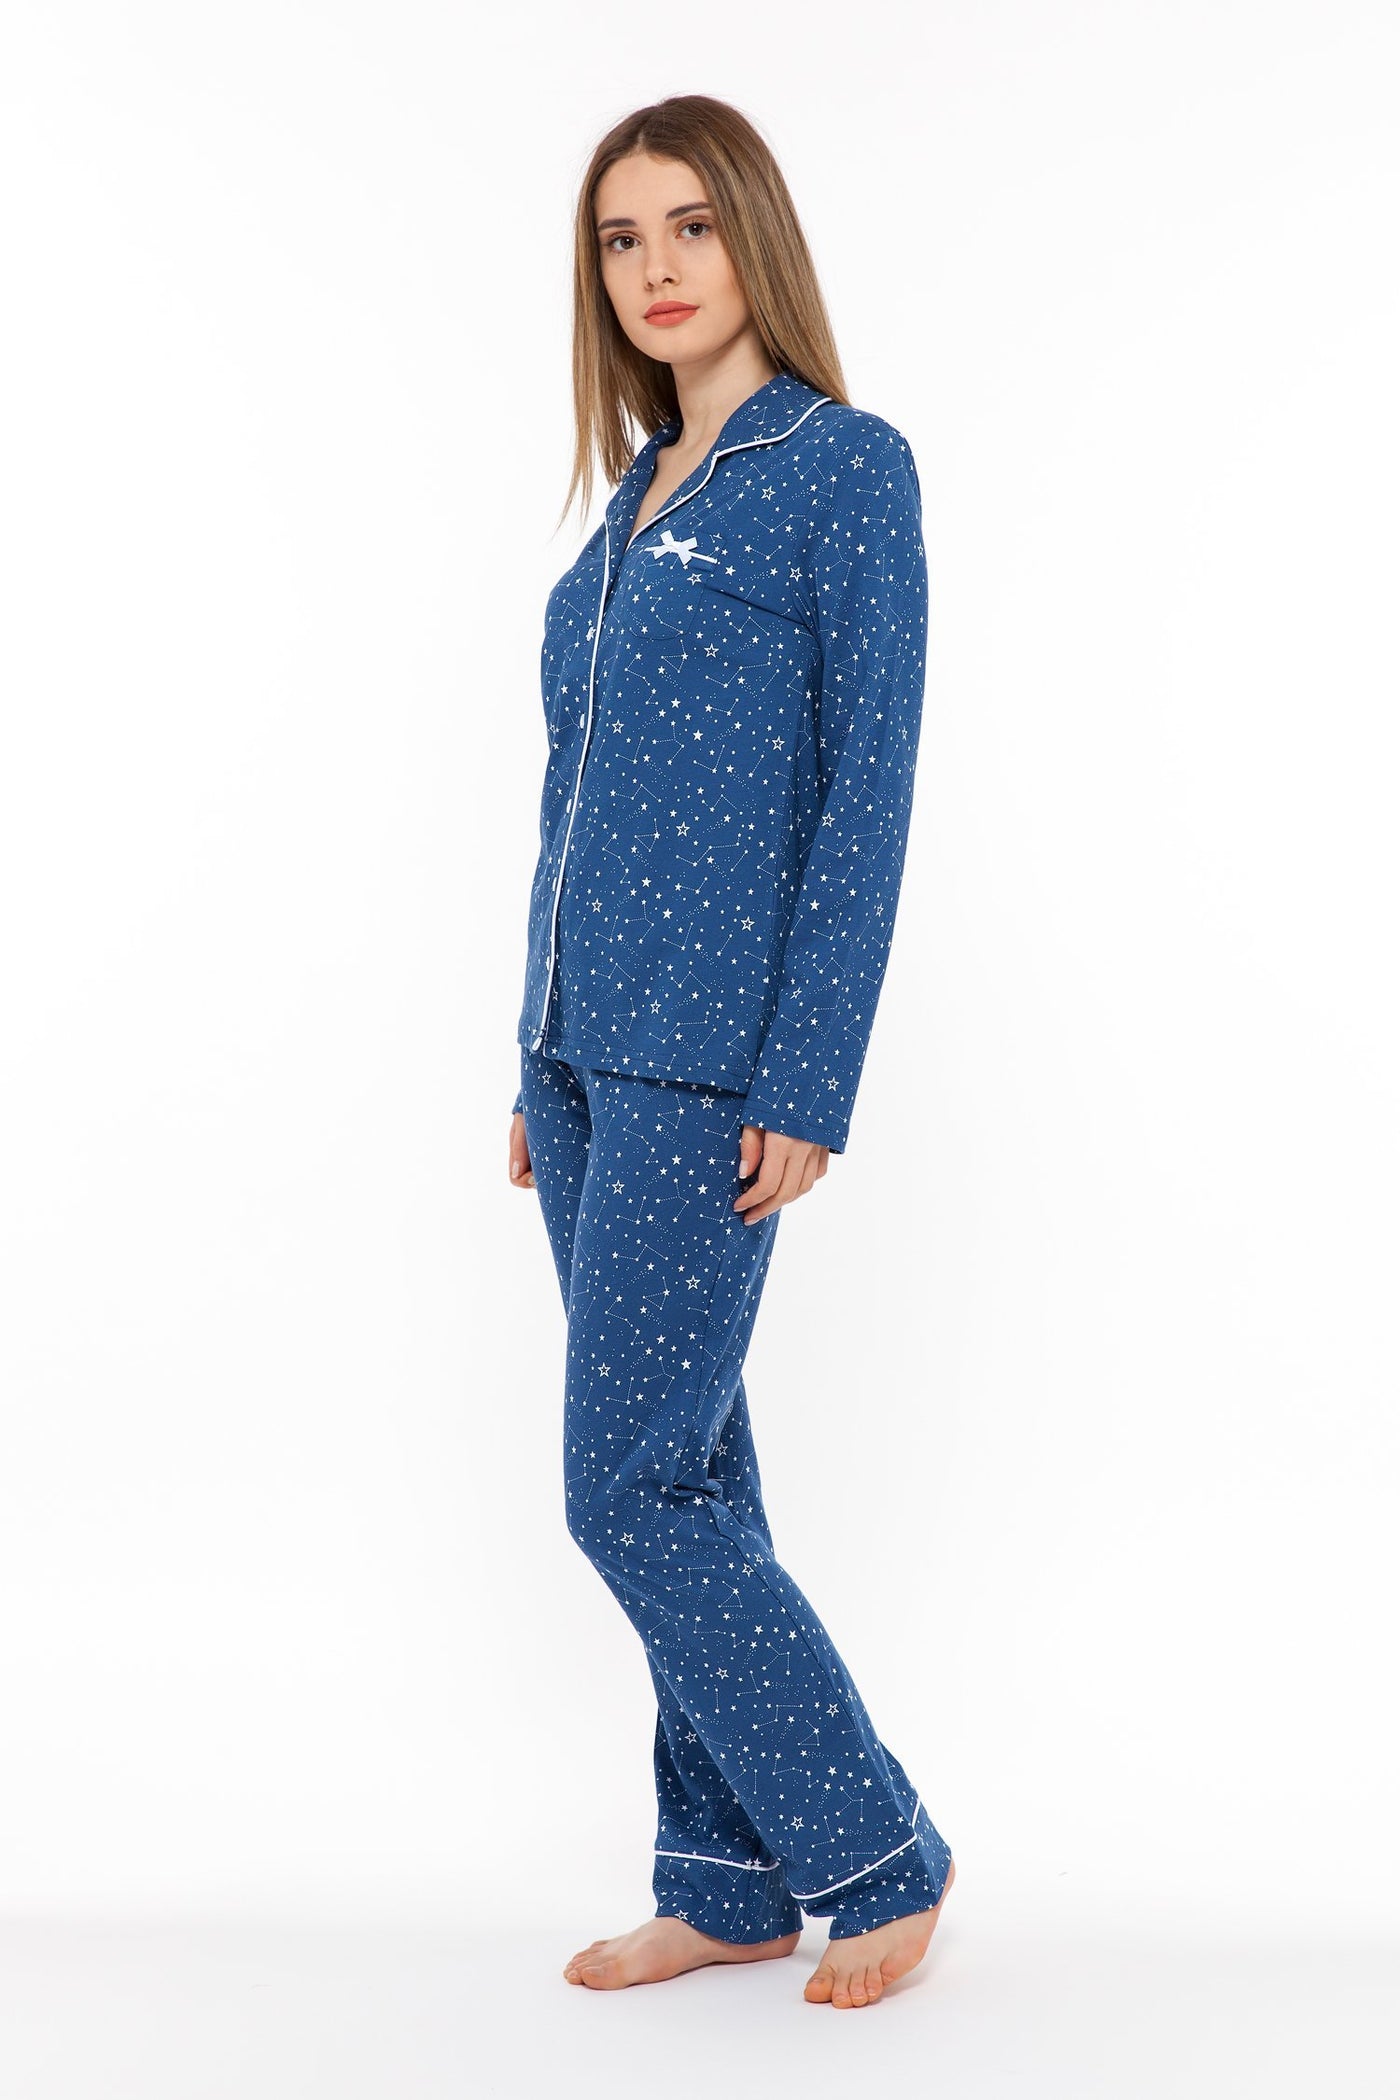 chassca jacket & pant pyjama set with galaxy print - Breakmood